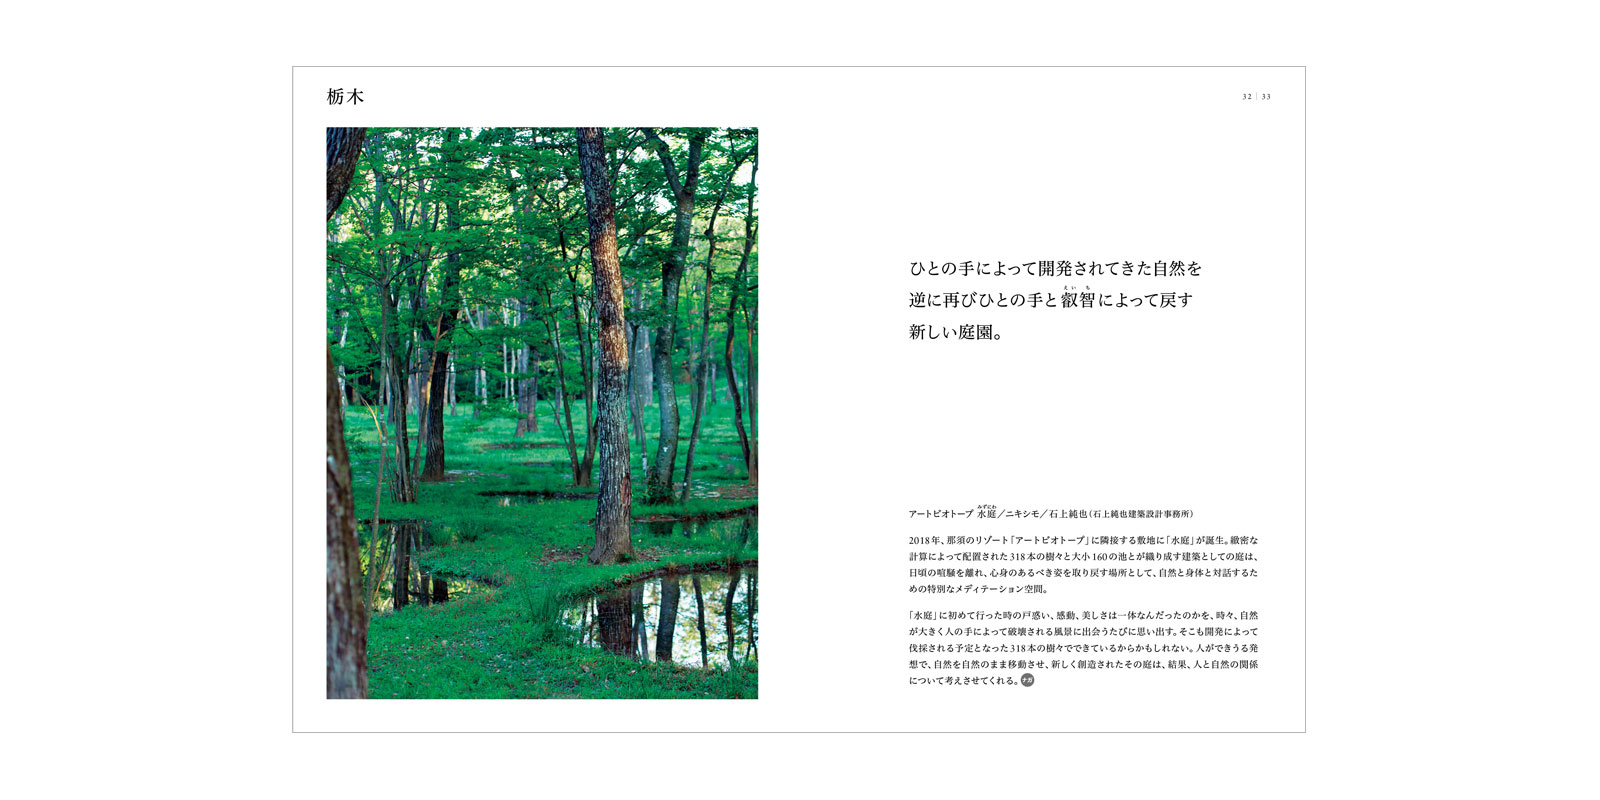 d47 MUSEUM「LONG LIFE DESIGN 2  祈りのデザイン」展 公式書籍